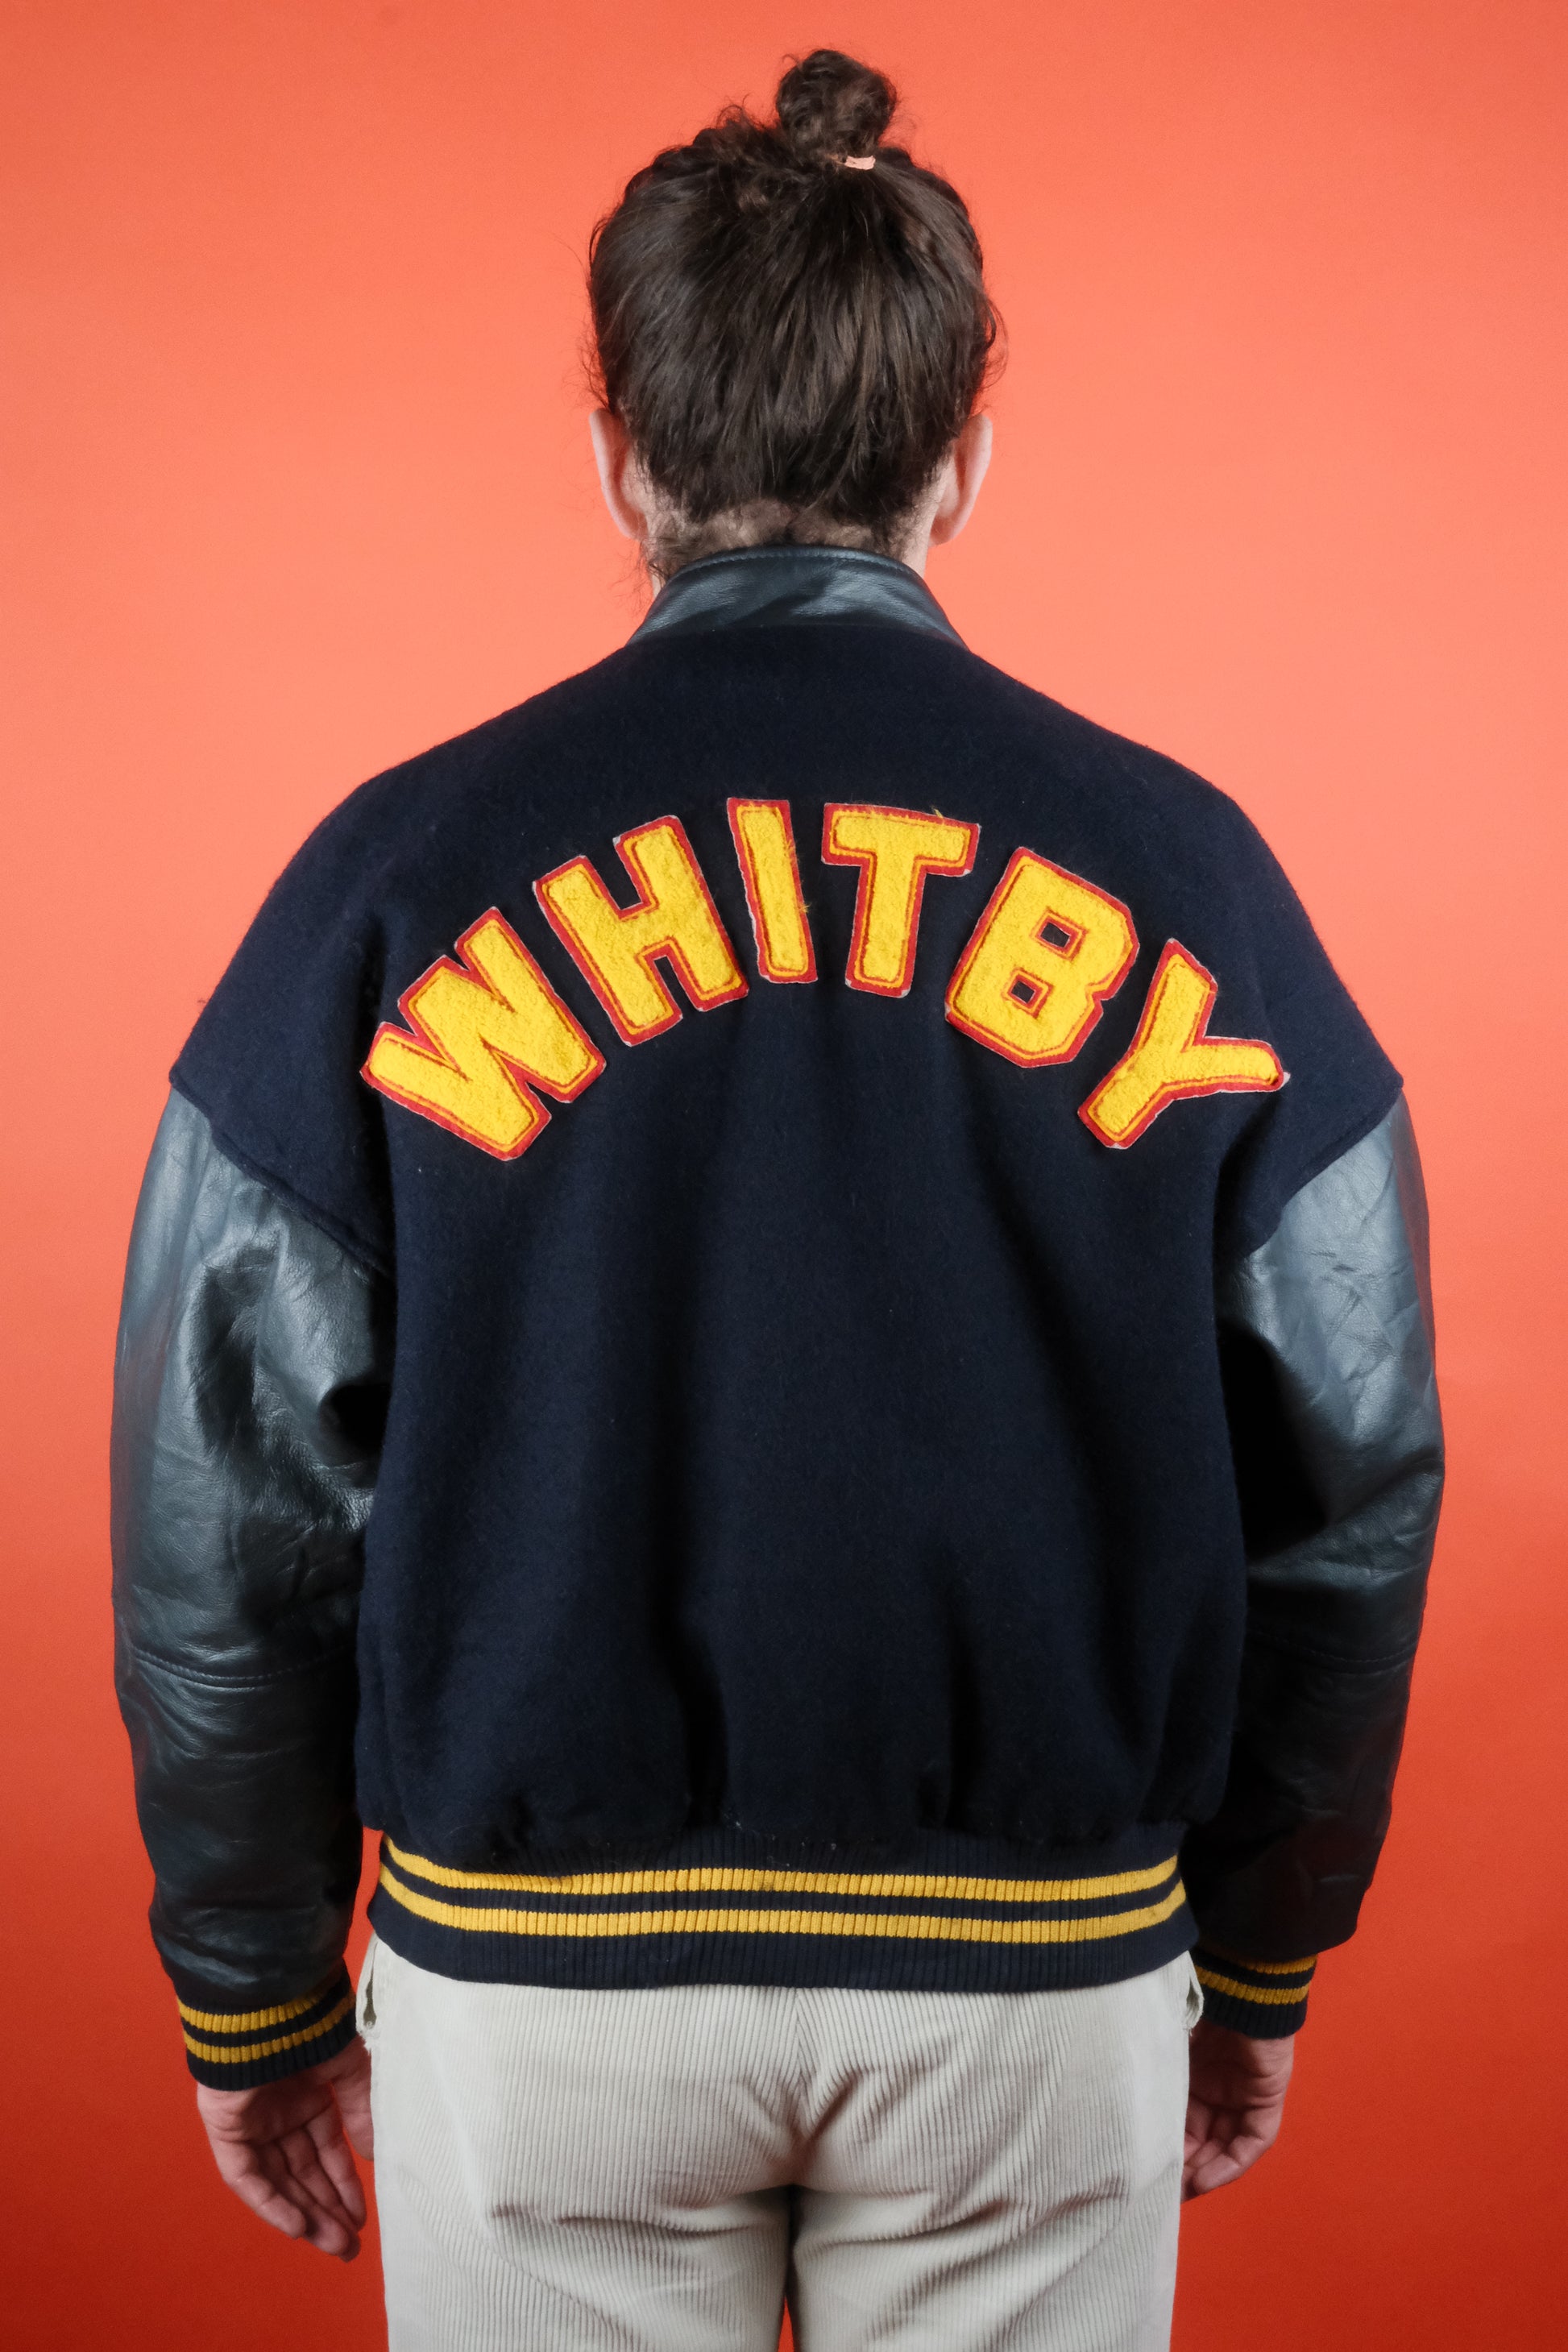 Plain & Simple WHITBY WILDCATS Varsity Jacket 'M-L' - vintage clothing clochard92.com